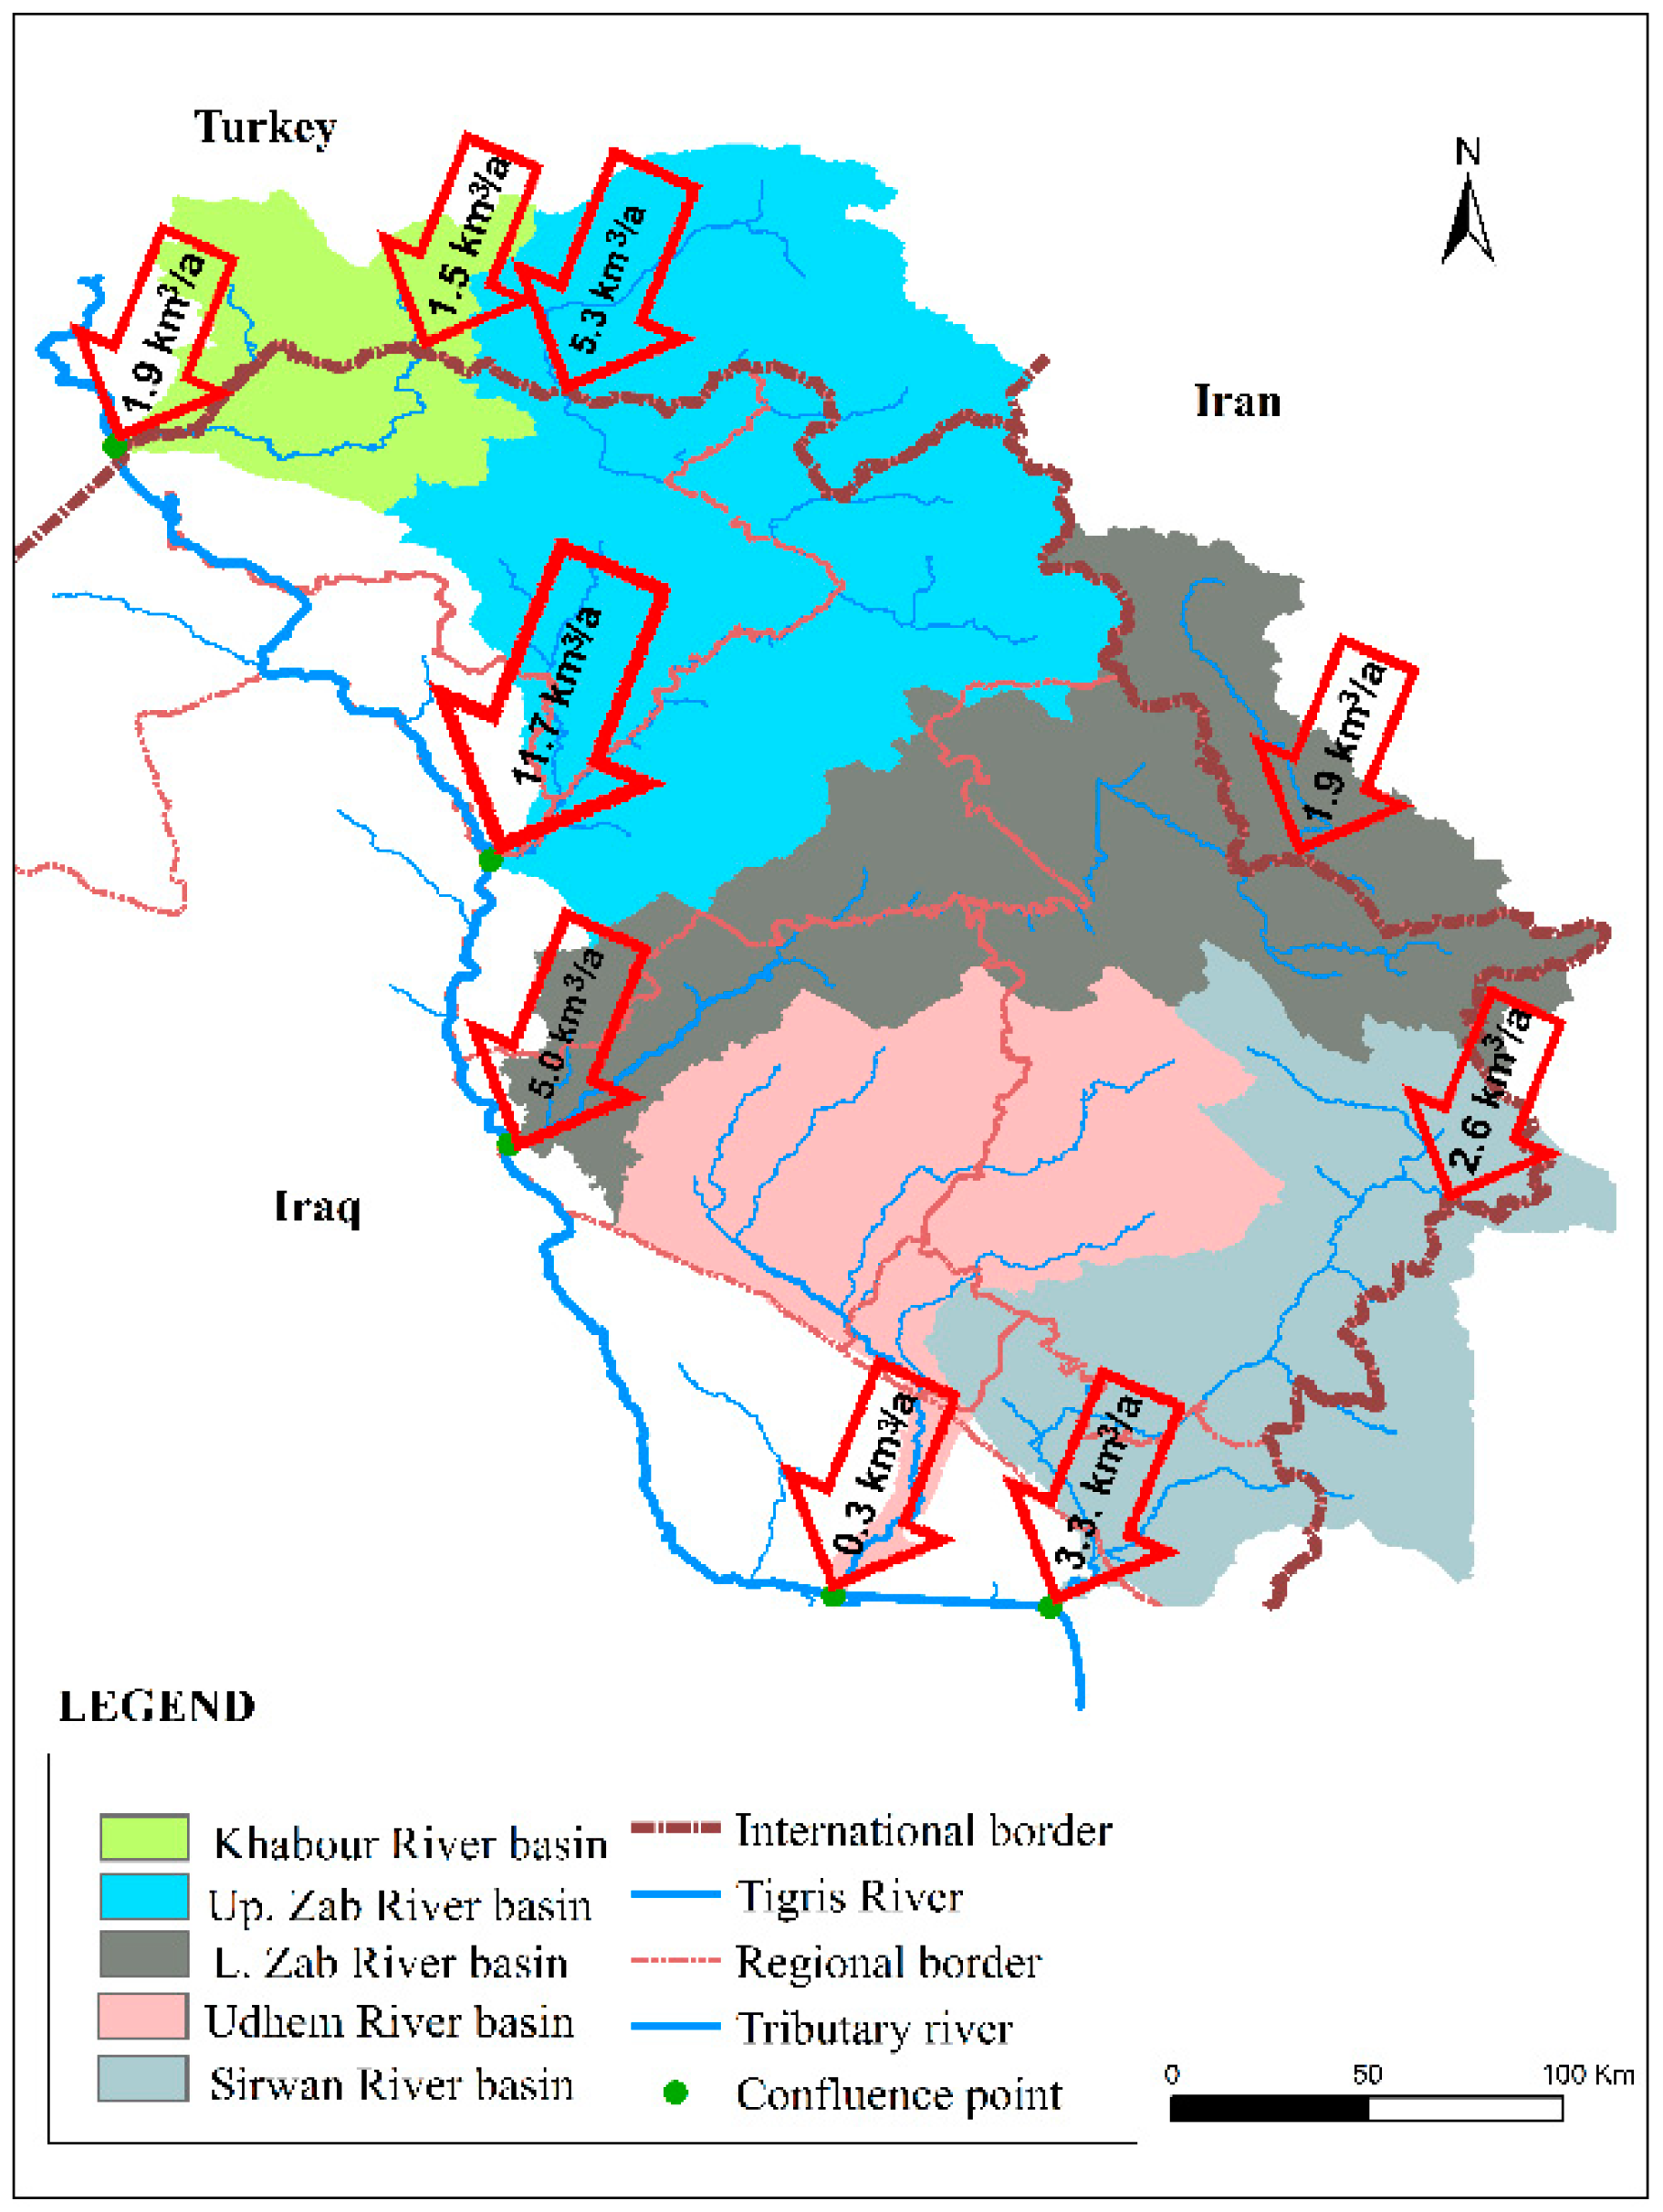 Games without Frontiers: Renegotiating the Boundaries of Power in Iraqi  Kurdistan